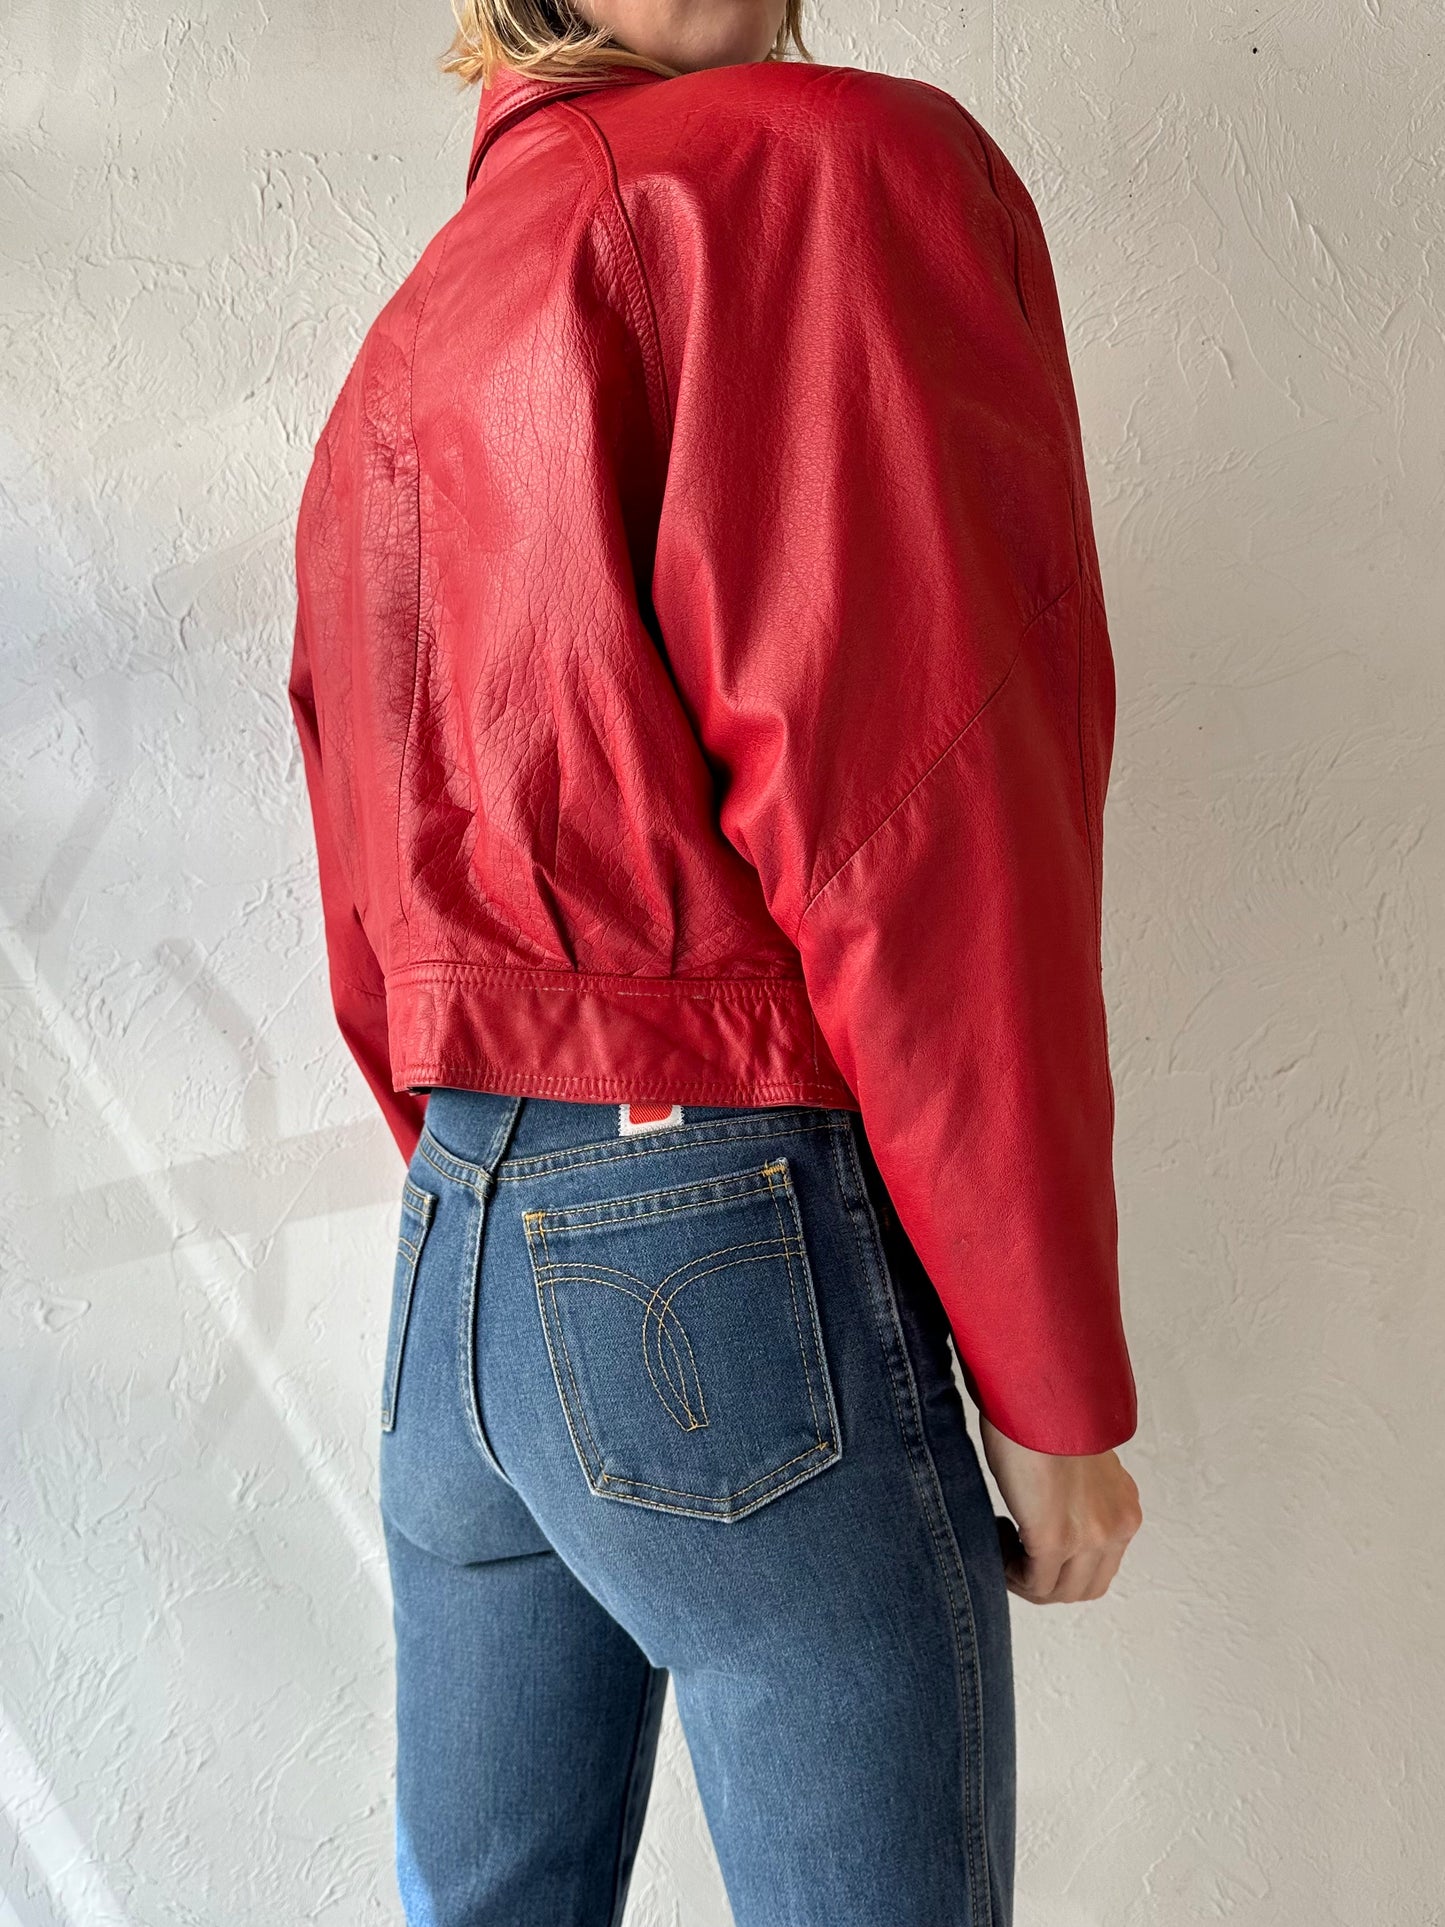 90s 'Wilsons' Red Leather Jacket / Medium